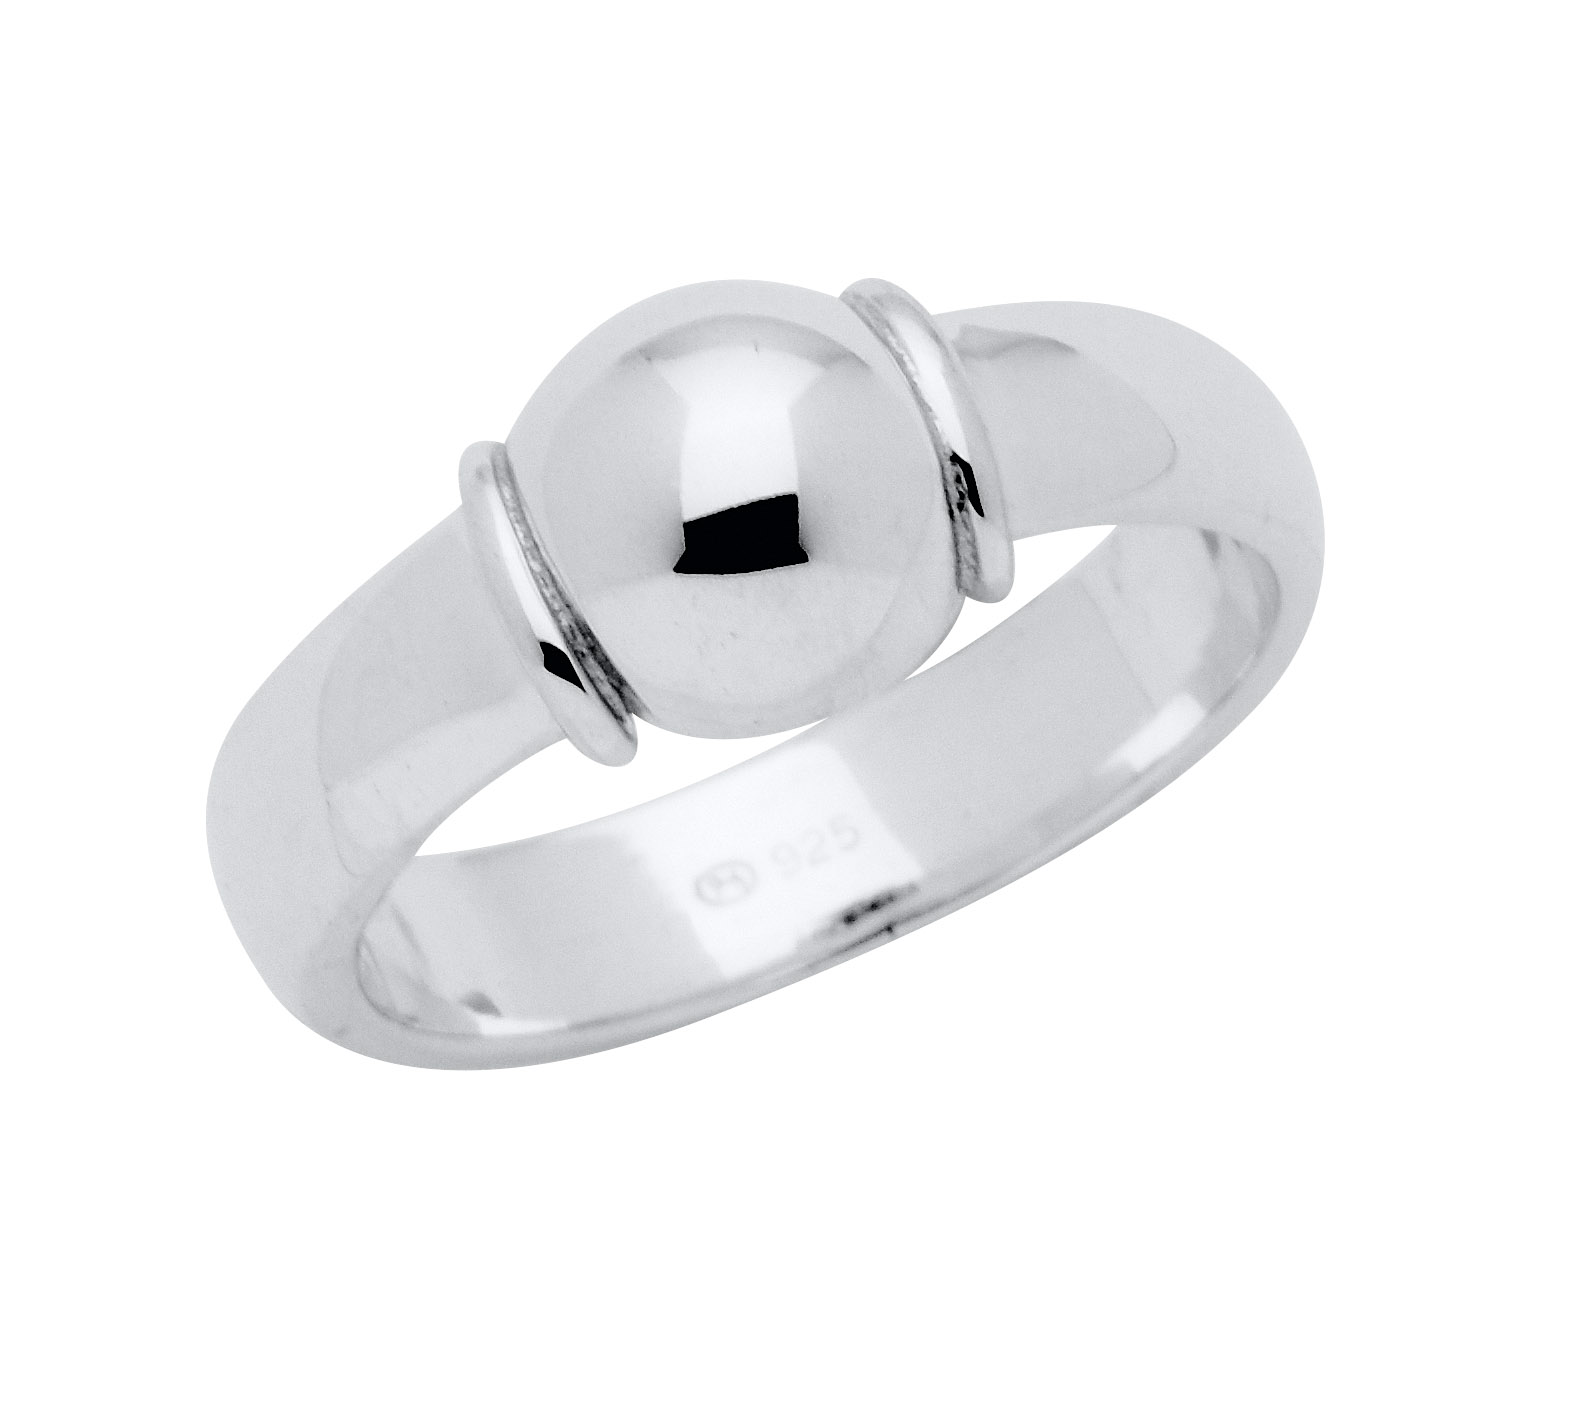 The Cape Cod Jewelry™ Ring – www.bagssaleusa.com/louis-vuitton/